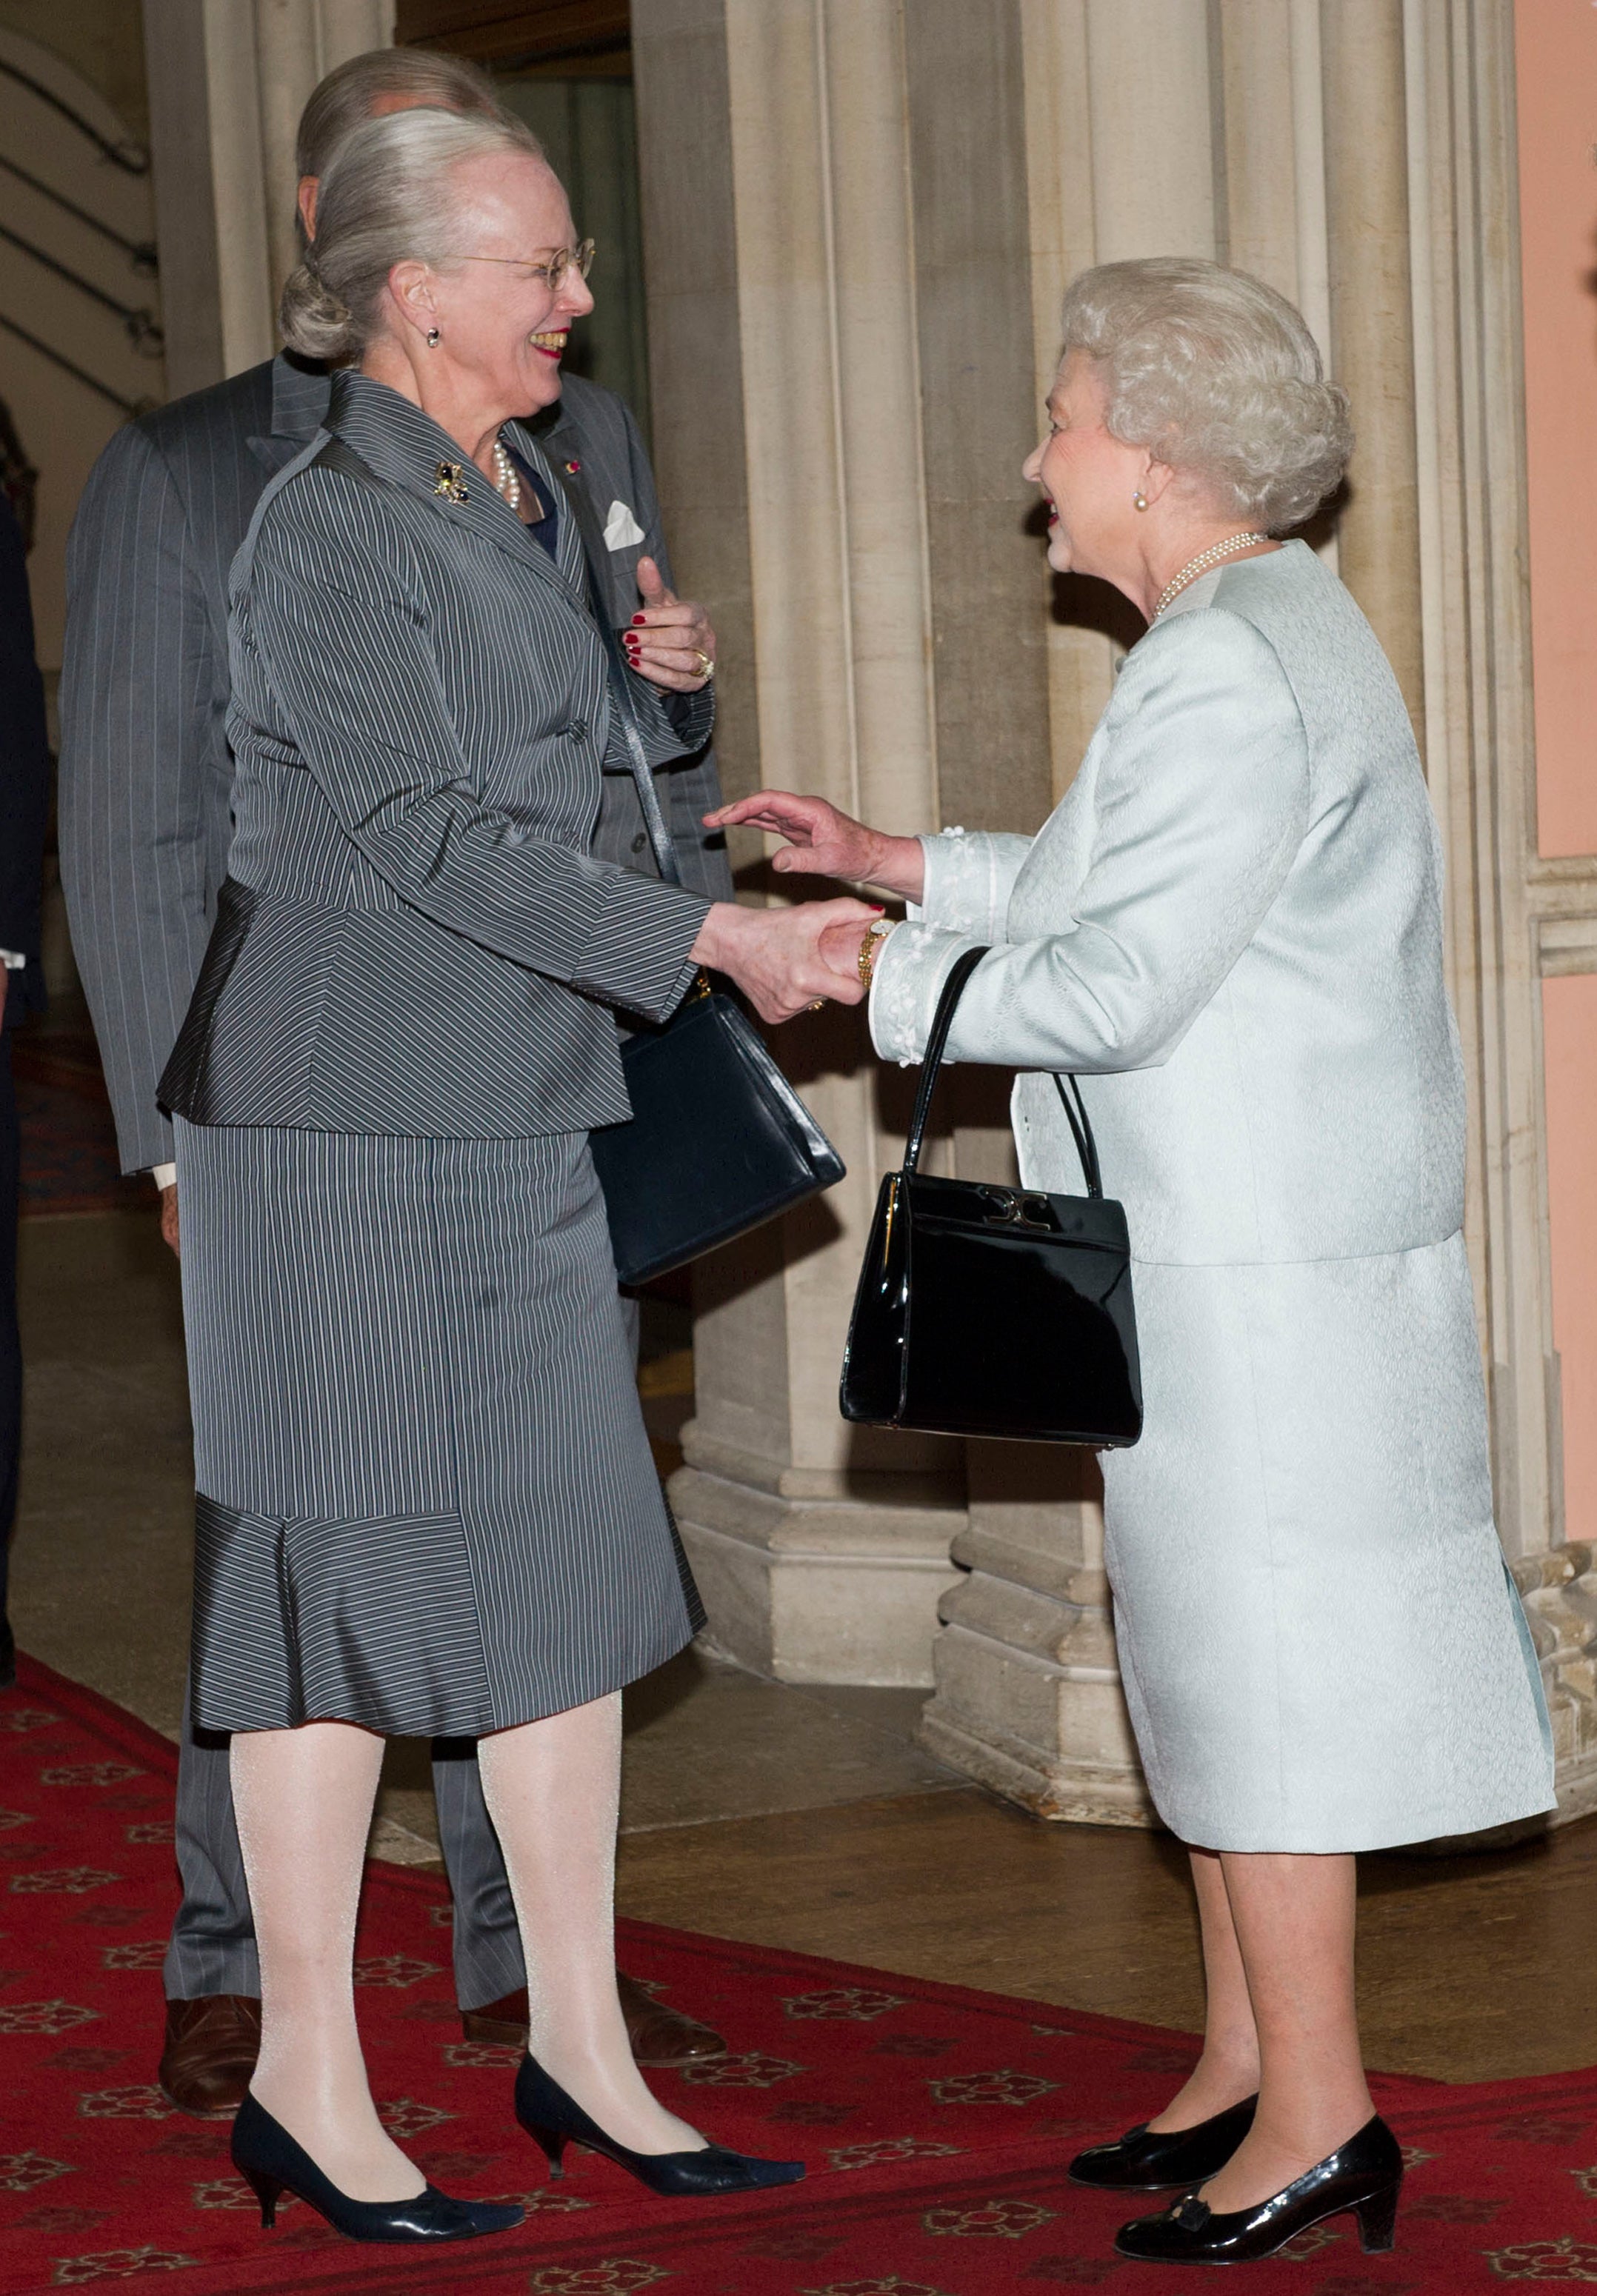 Denmark’s Queen Margrethe II was close friend of Queen Elizabeth II